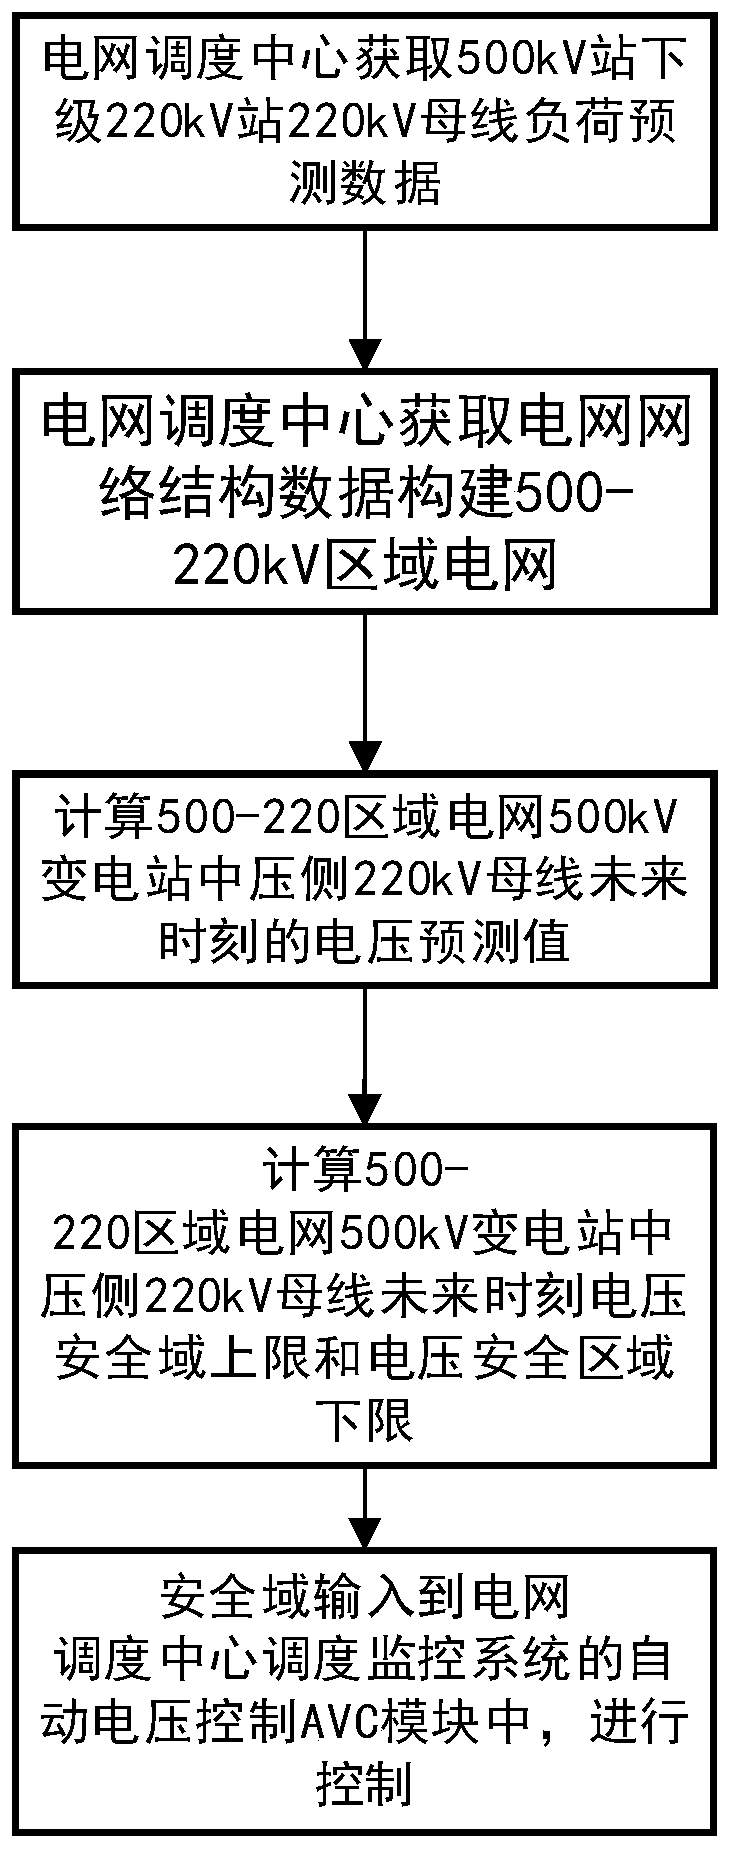 500-220kV regional power grid automatic voltage control method based on voltage trend prediction